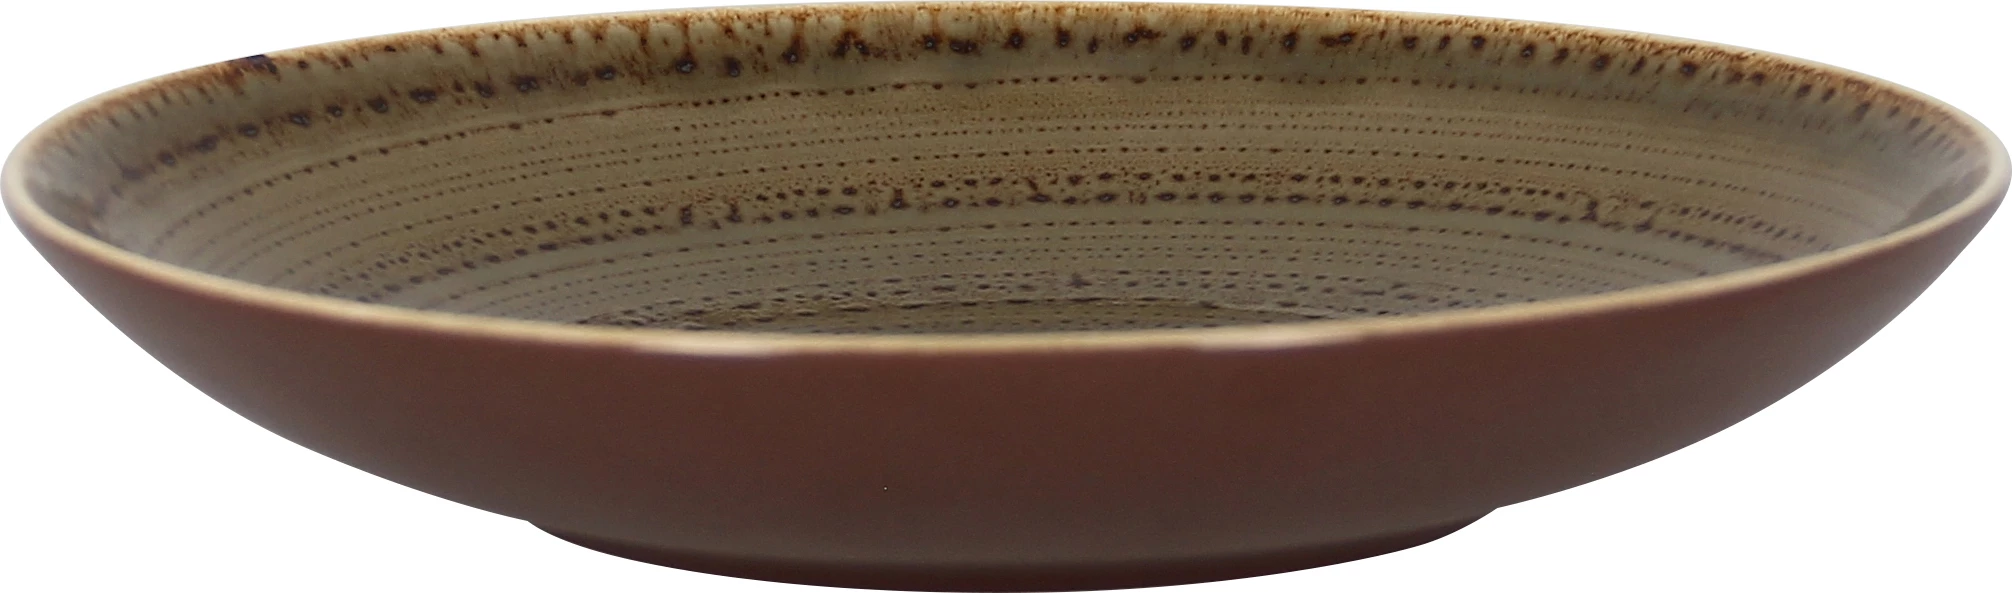 RAK Twirl tallerken, dyb, oliven, ø23 cm